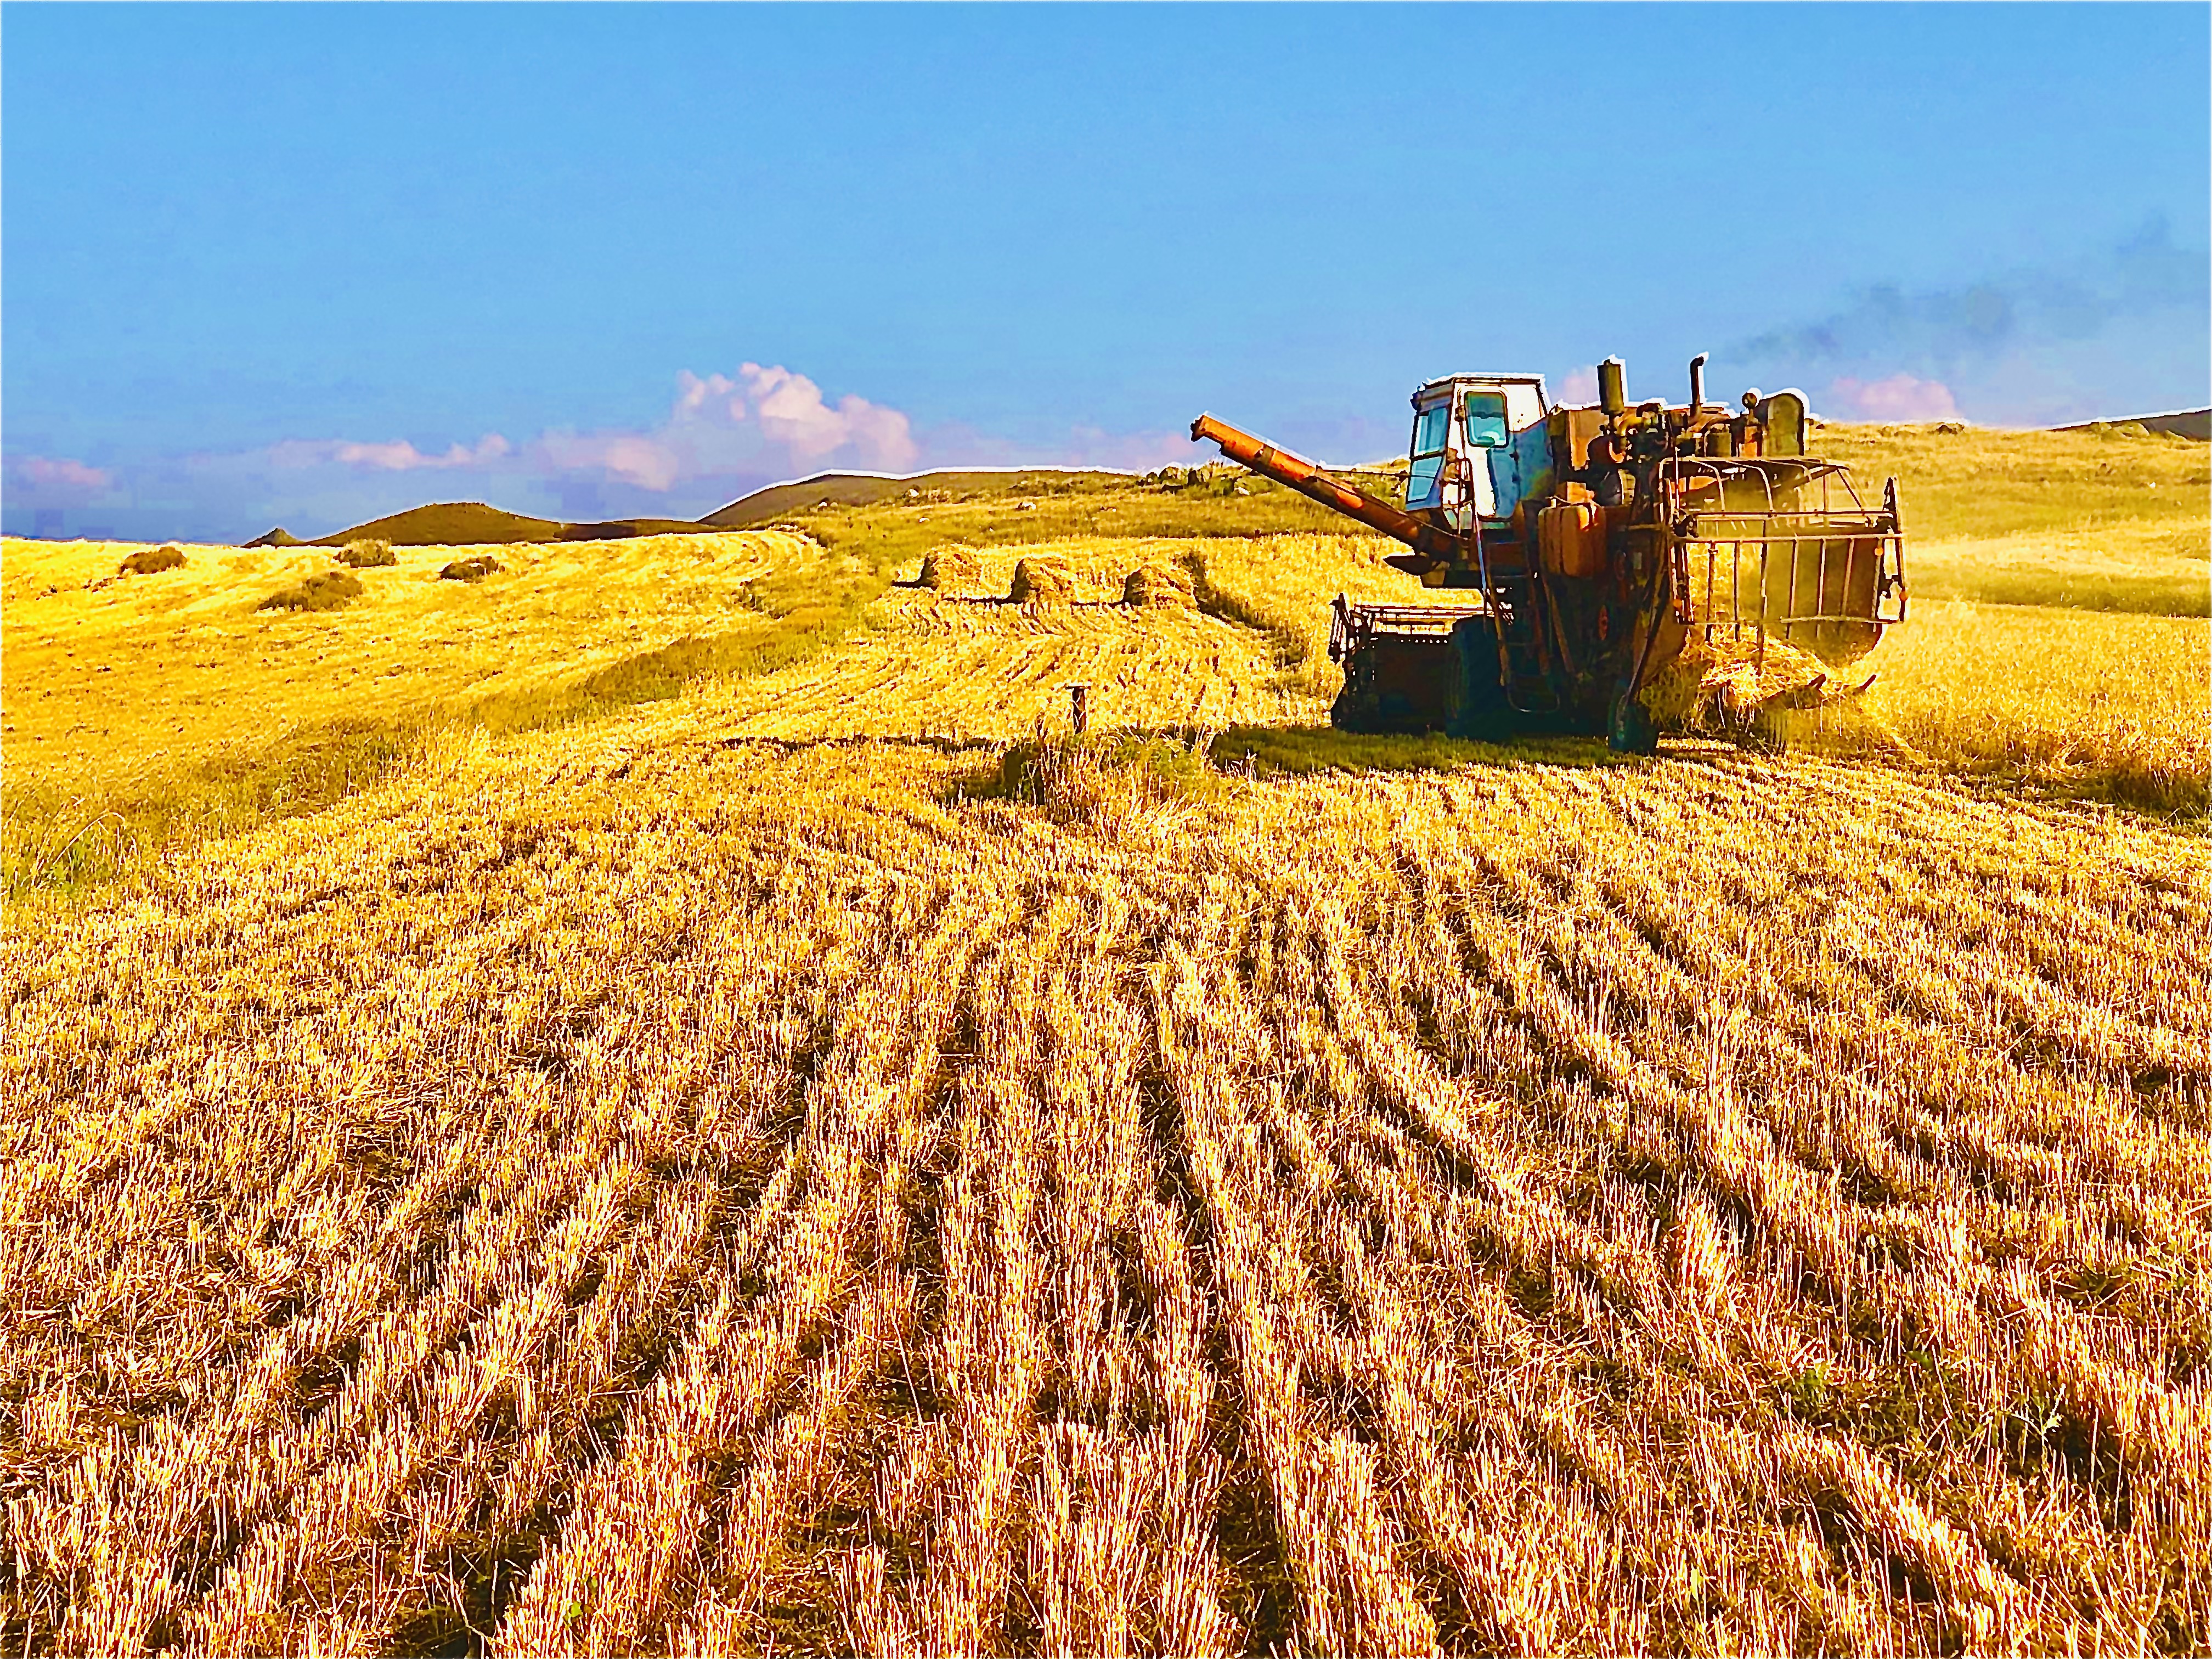 Wheat Fields of Shirak Province, Armenia, photo by Narek Avetisyan, Creative Commons Attribution-Share Alike 4.0 International license.